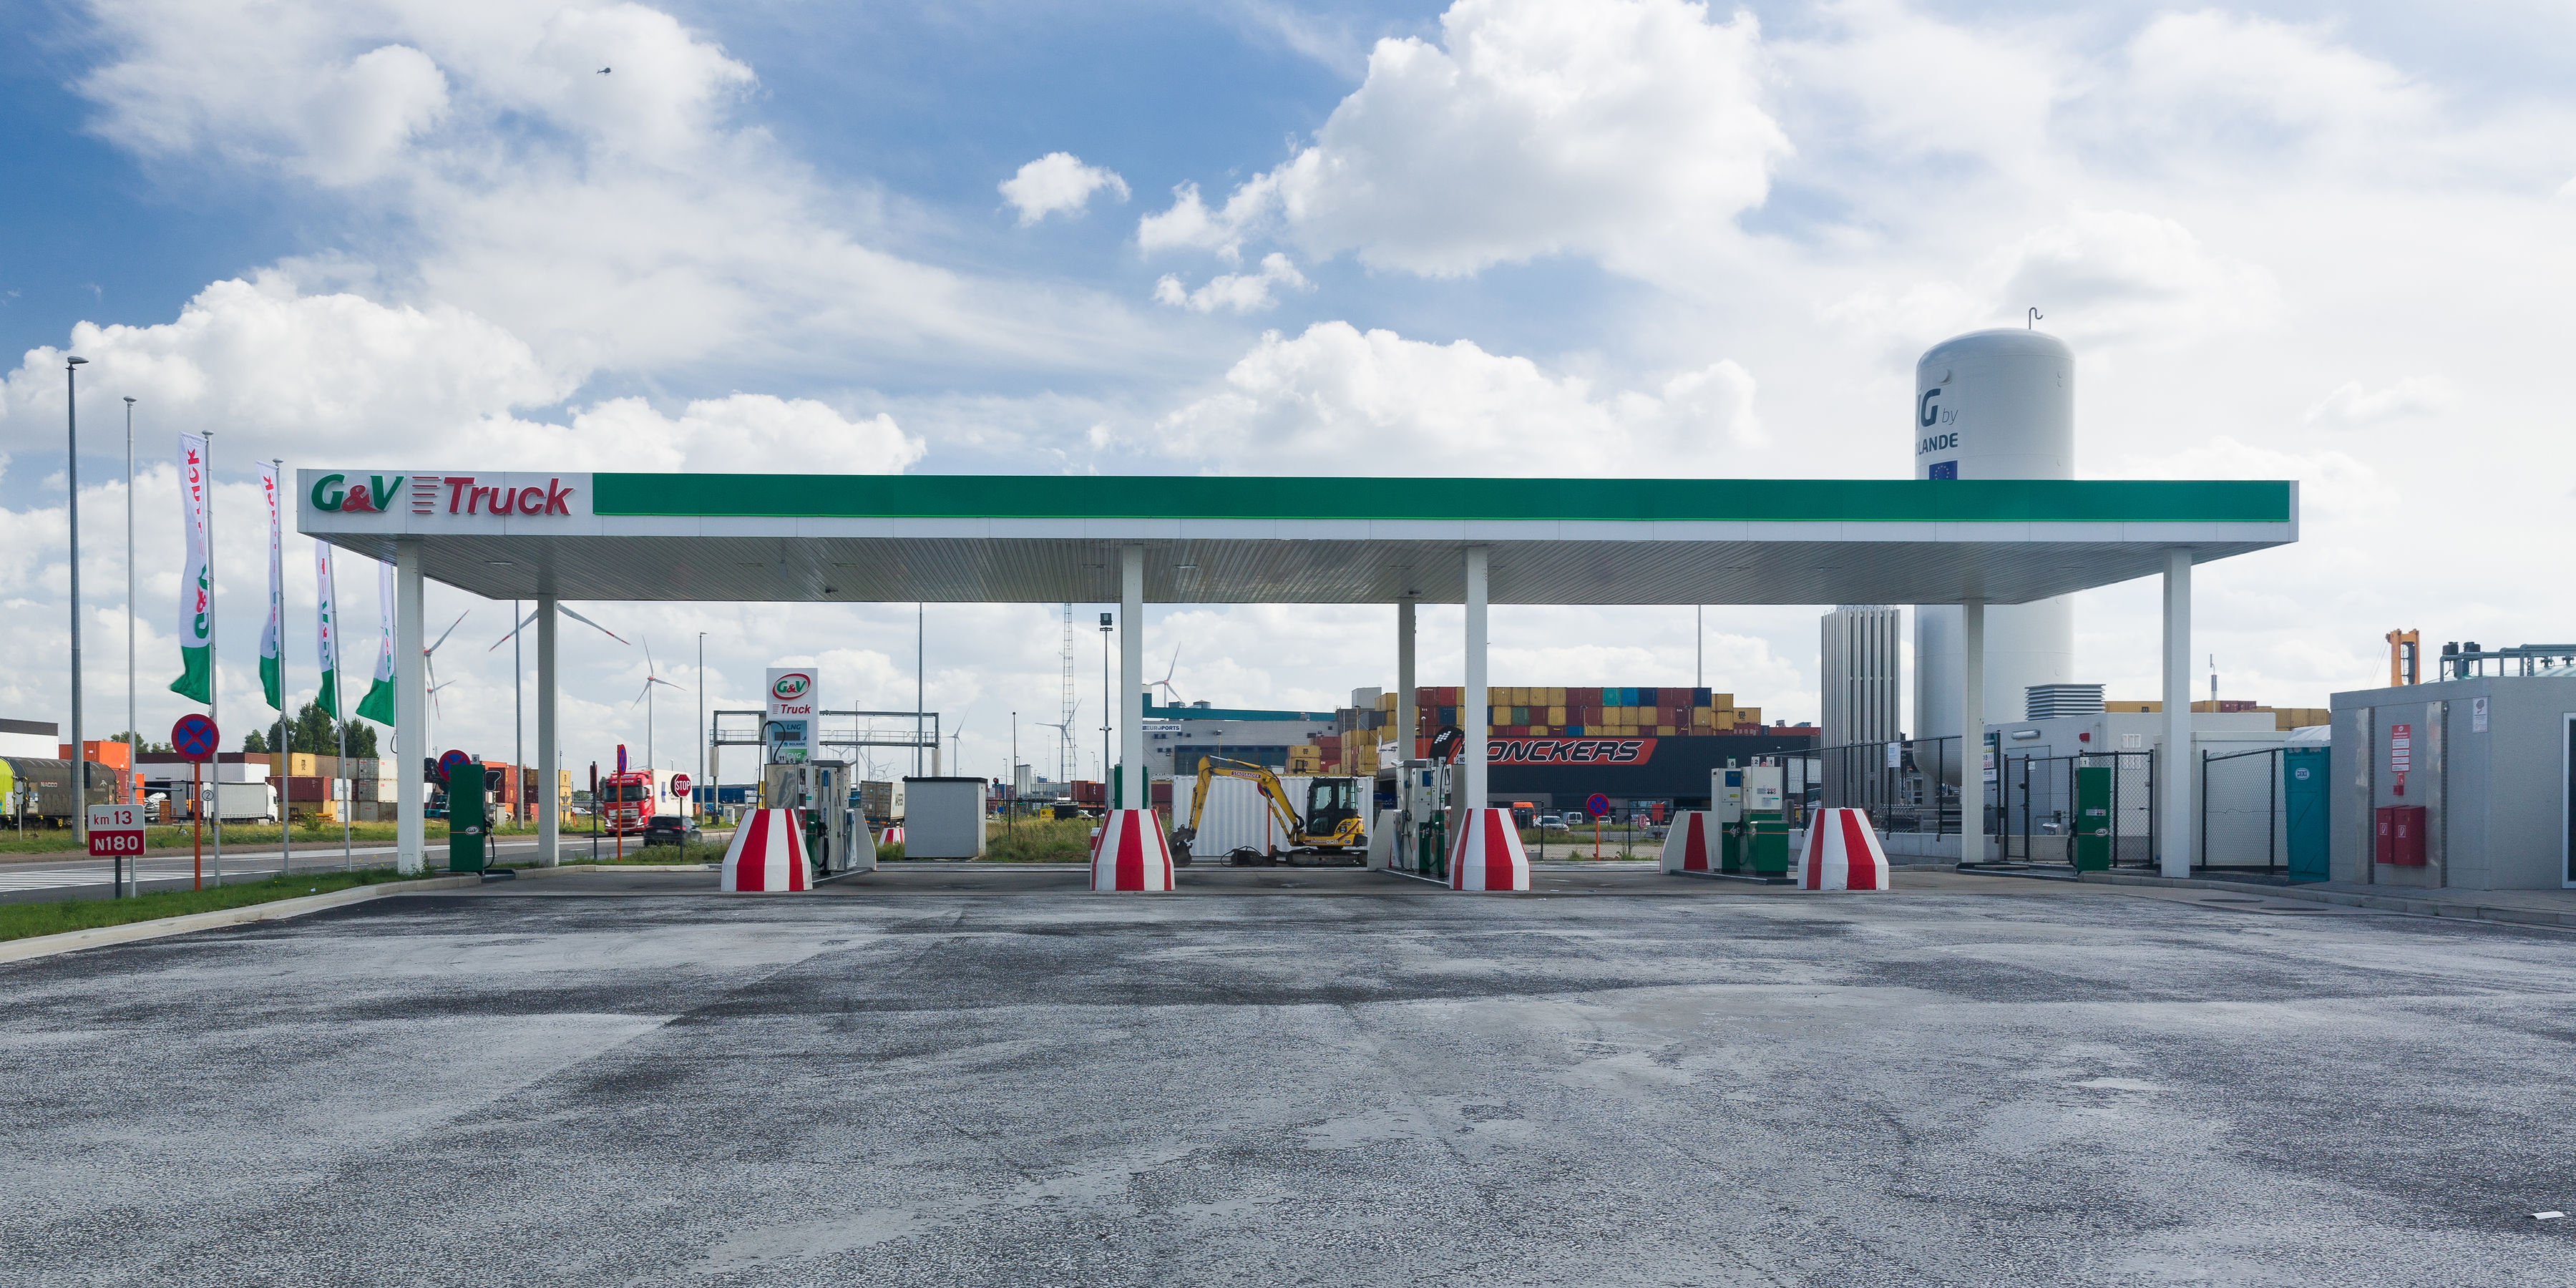 Rolande, G&V Energy open LNG fueling station in Antwerp